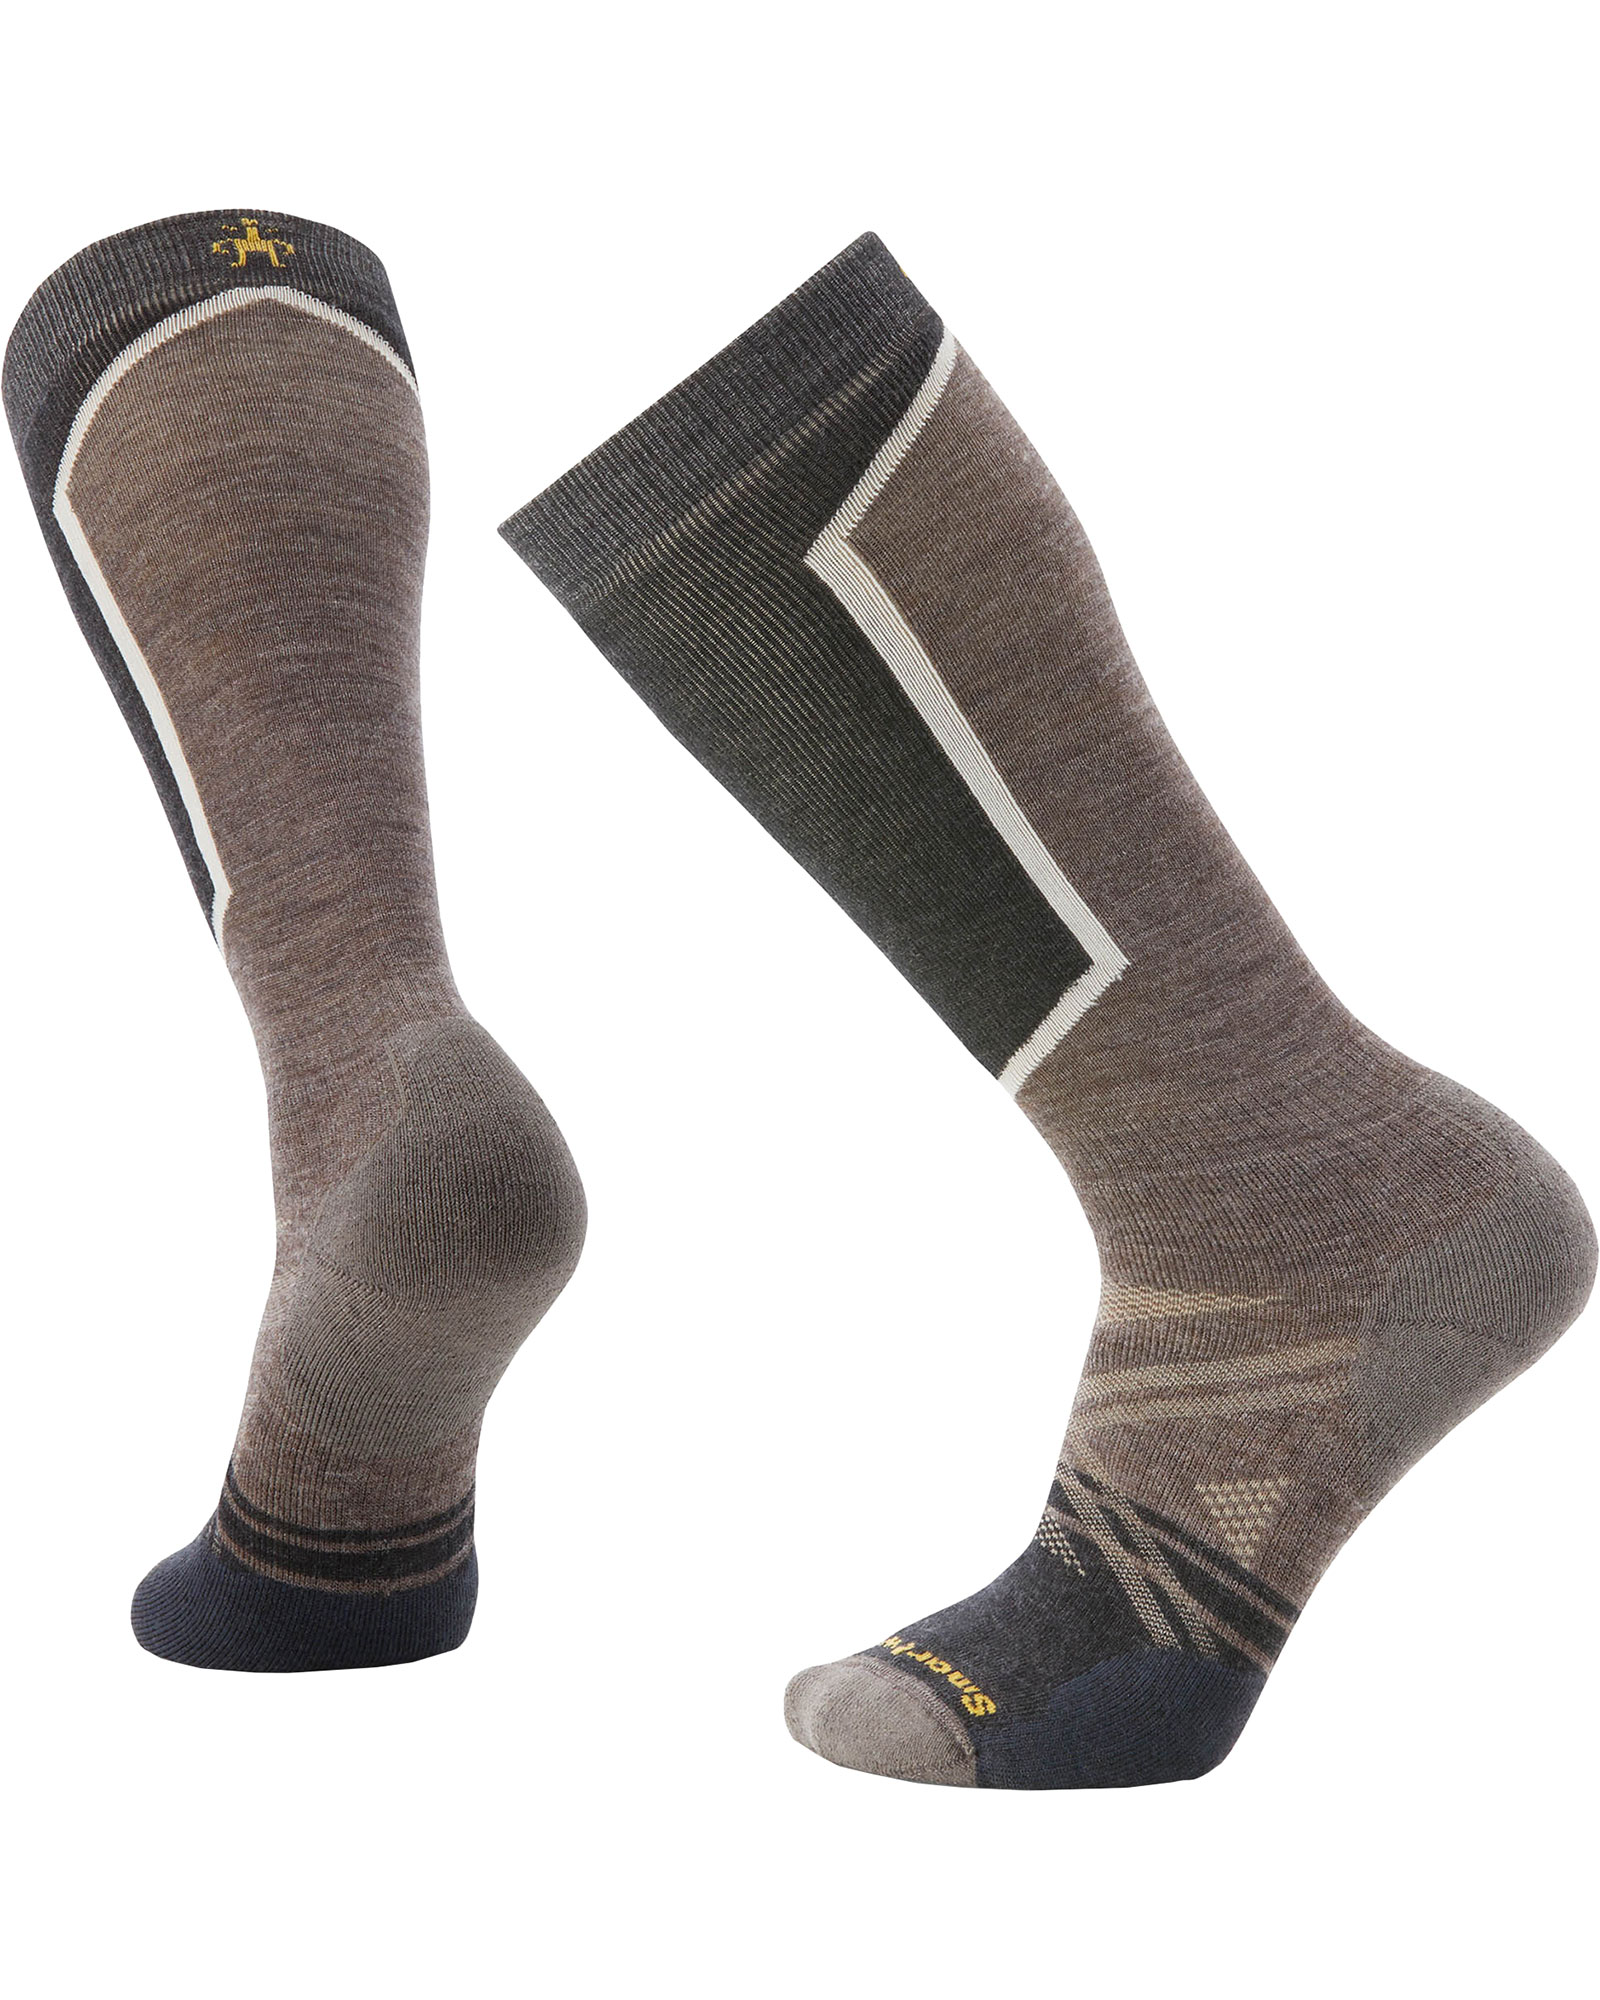 Smartwool Full Cushion Ski Socks - Taupe M